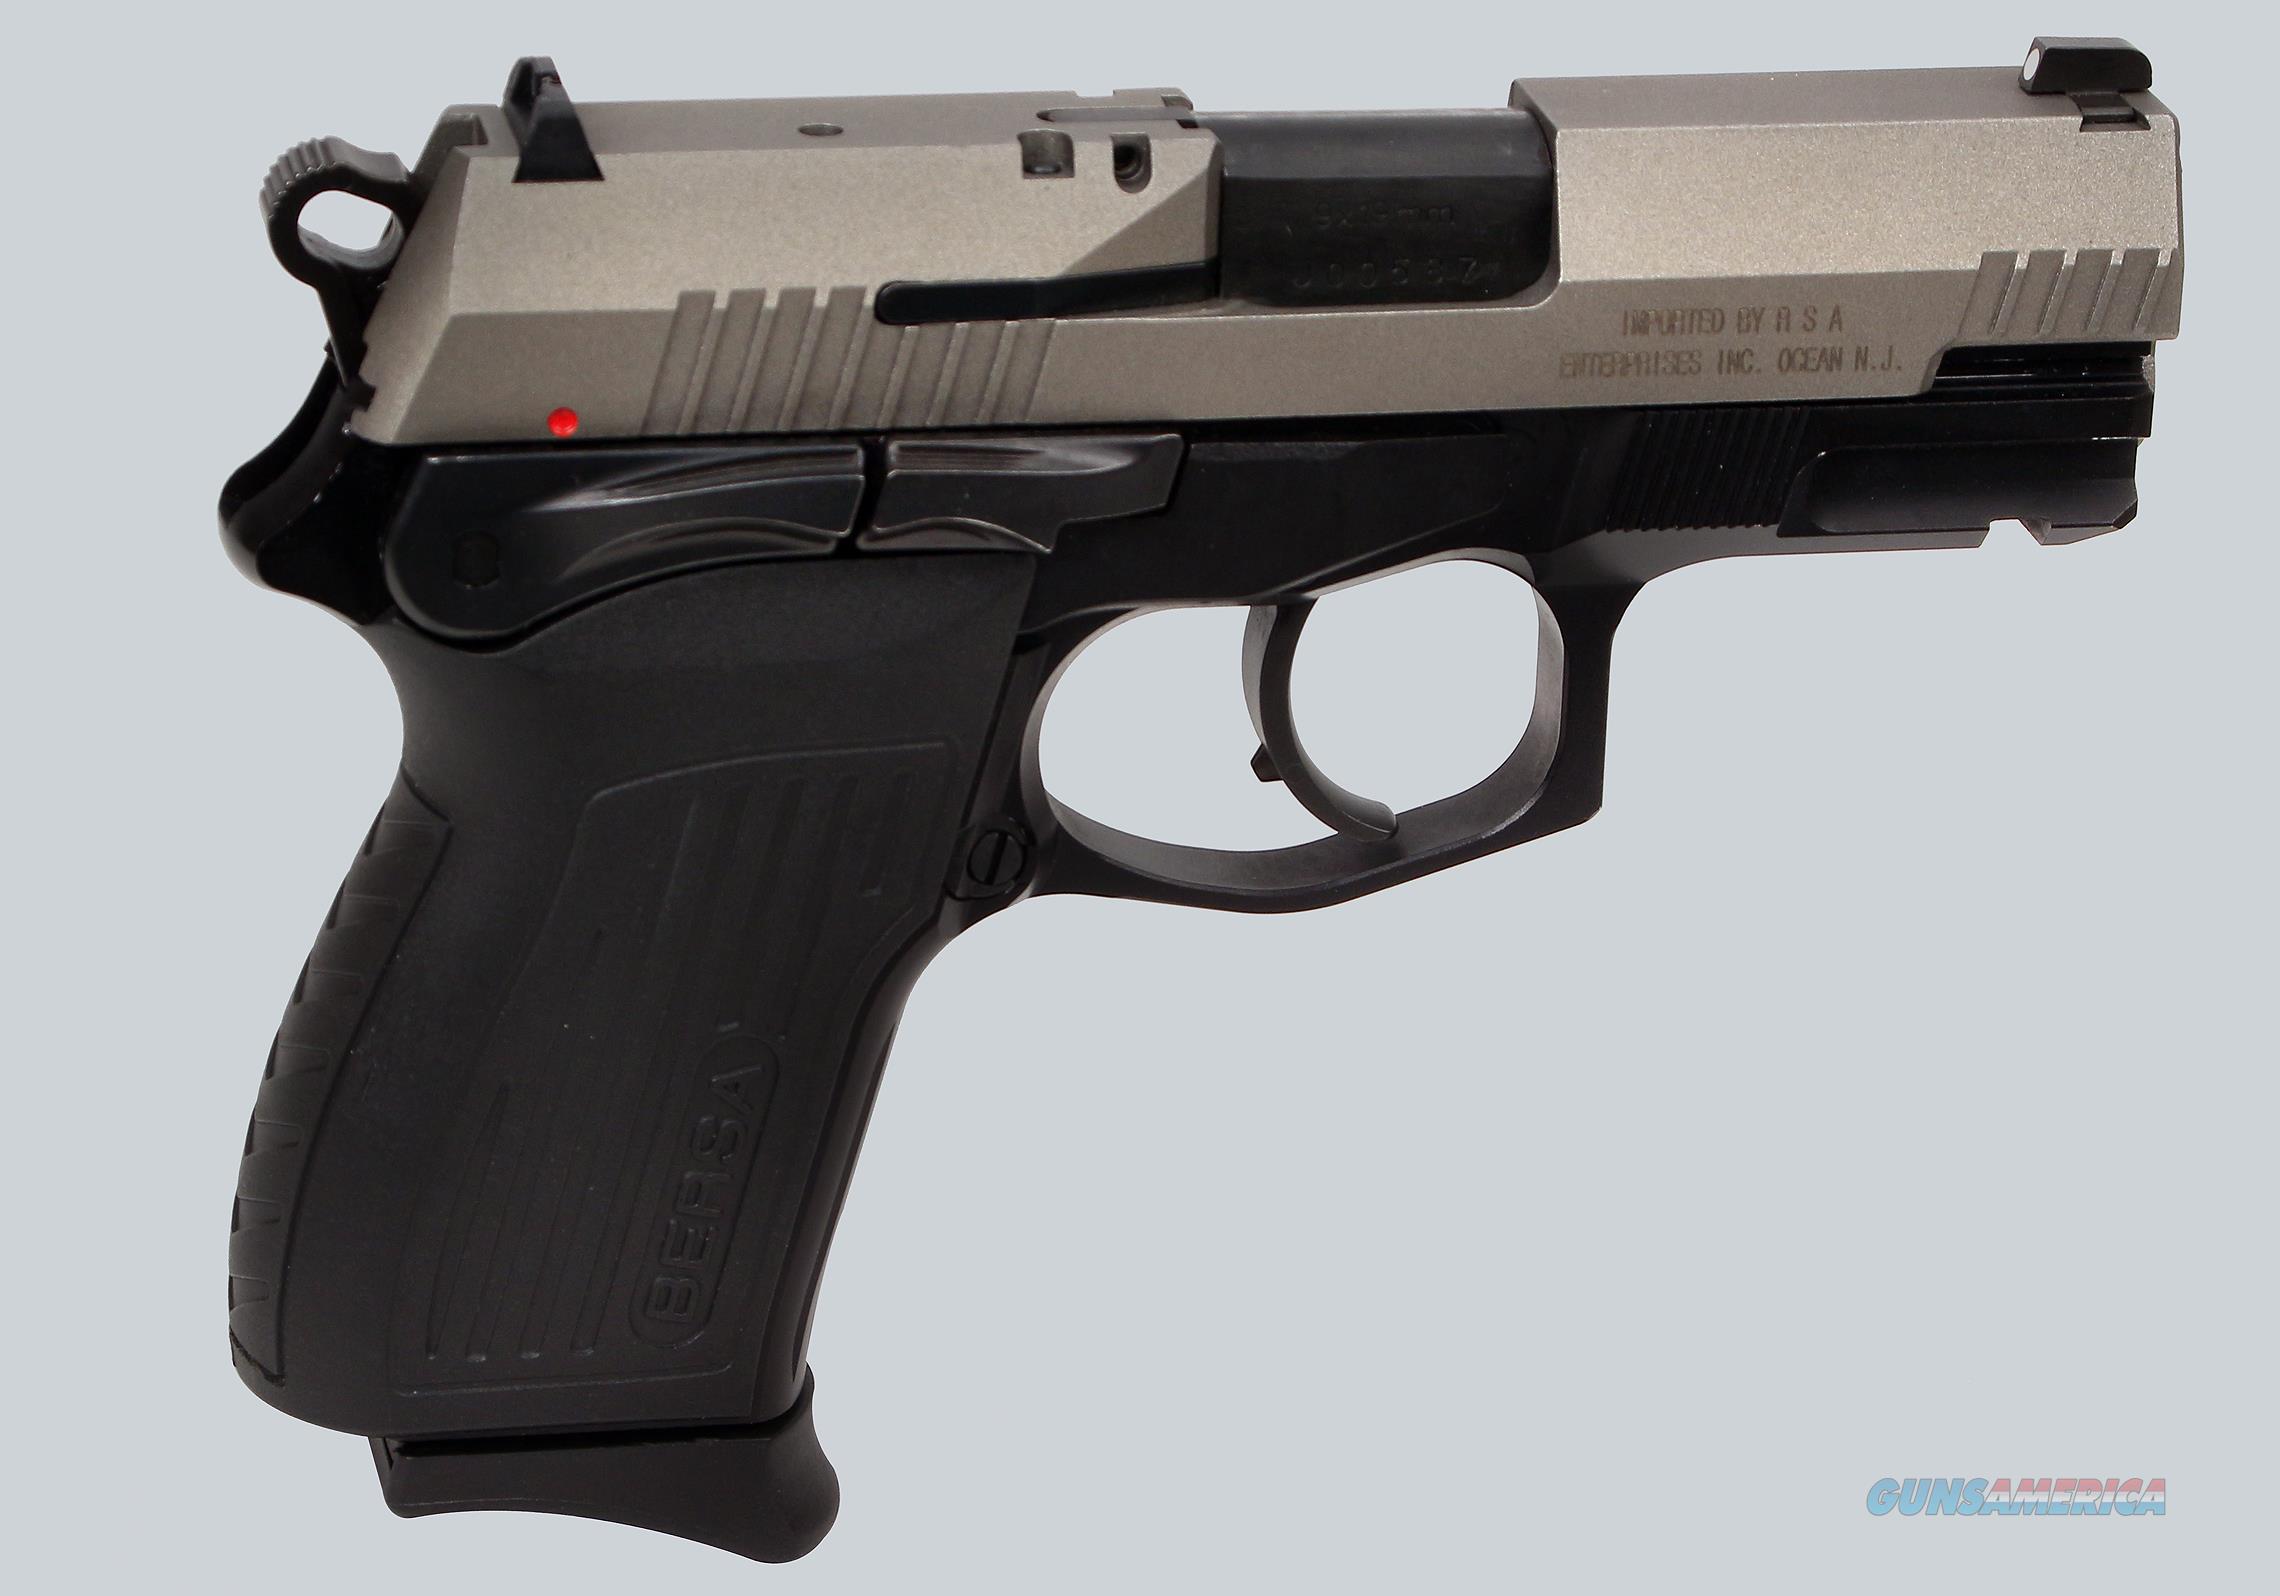 Bersa Rsa 9mm Tpr9c Pistol For Sale At 964036996 7082